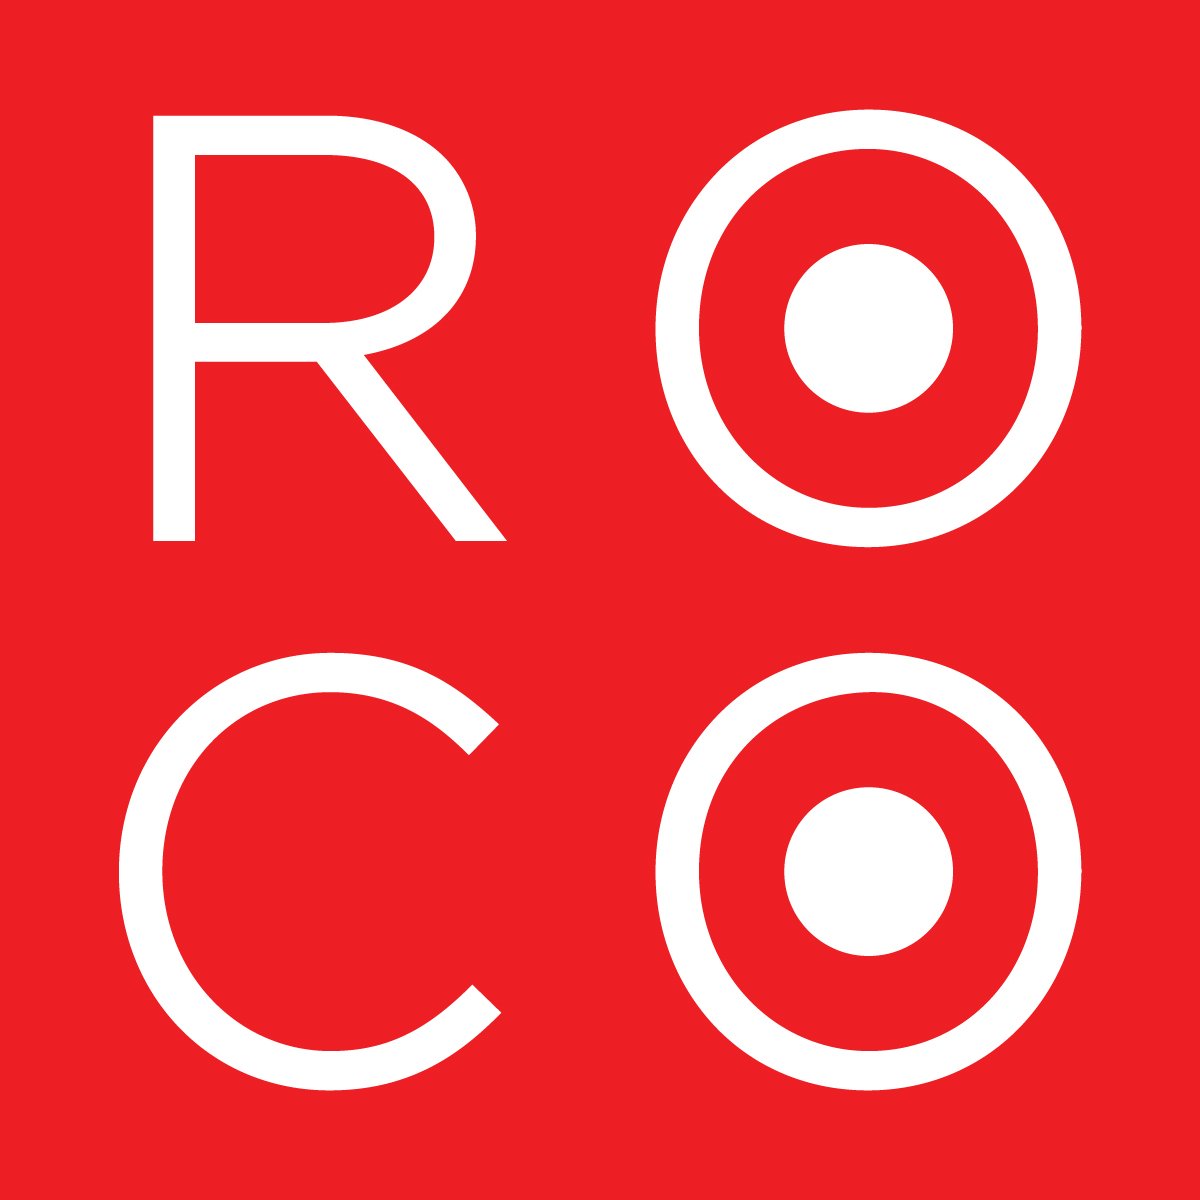 ROCO-logo-Red-square.jpg